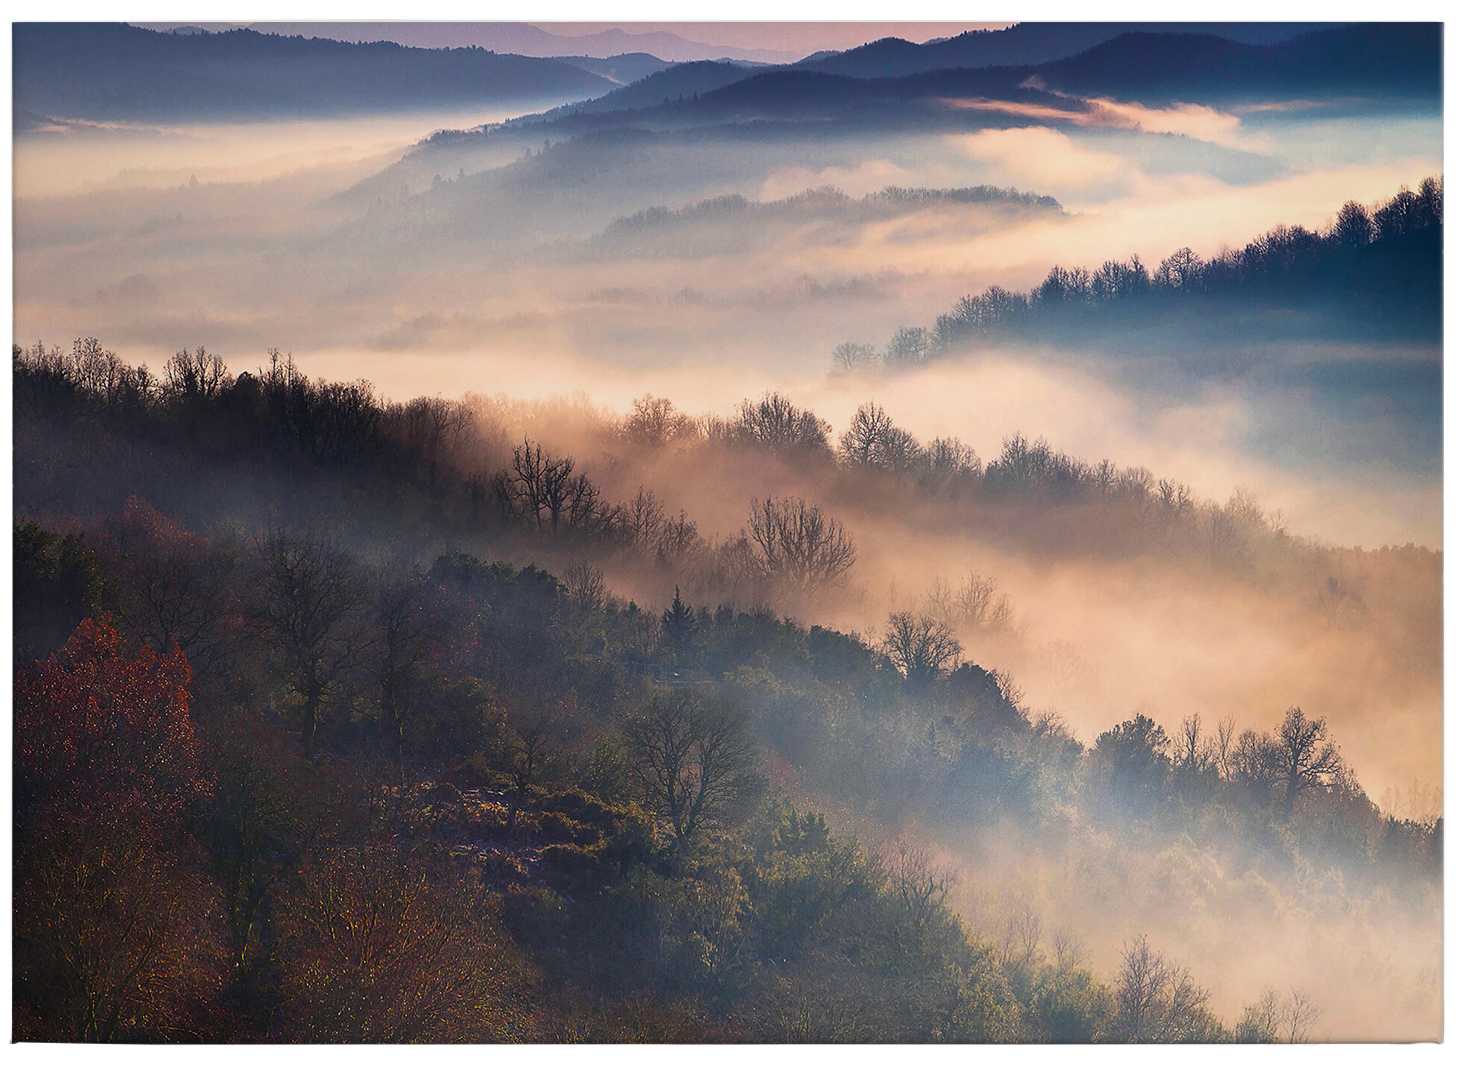             Cuadro en lienzo Tipomiadi Panorama forestal en la niebla - 0,70 m x 0,50 m
        